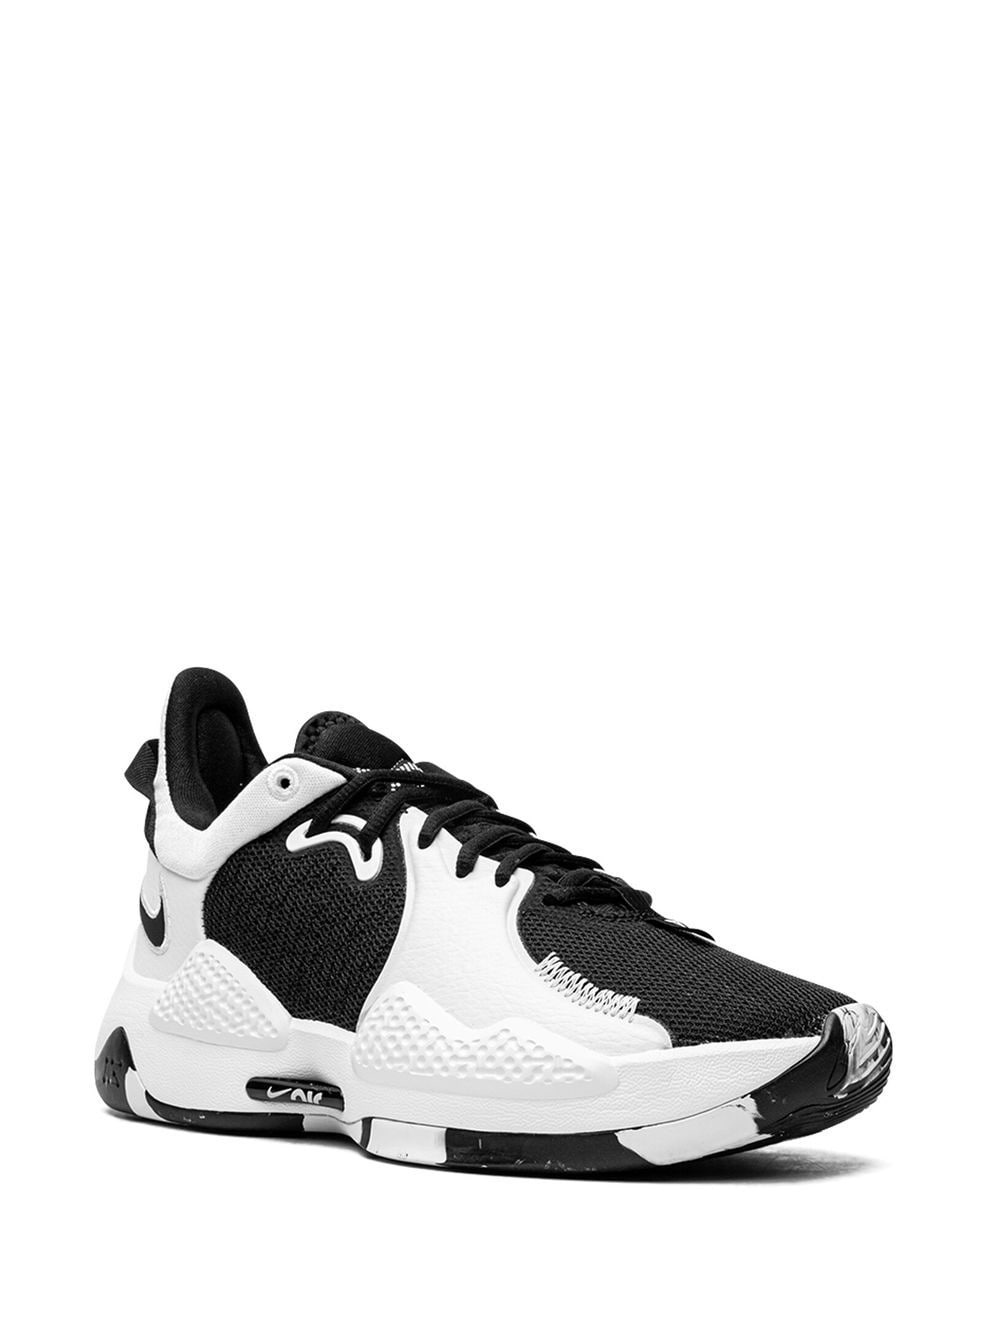 PG 5 Team "White/Black" sneakers - 2